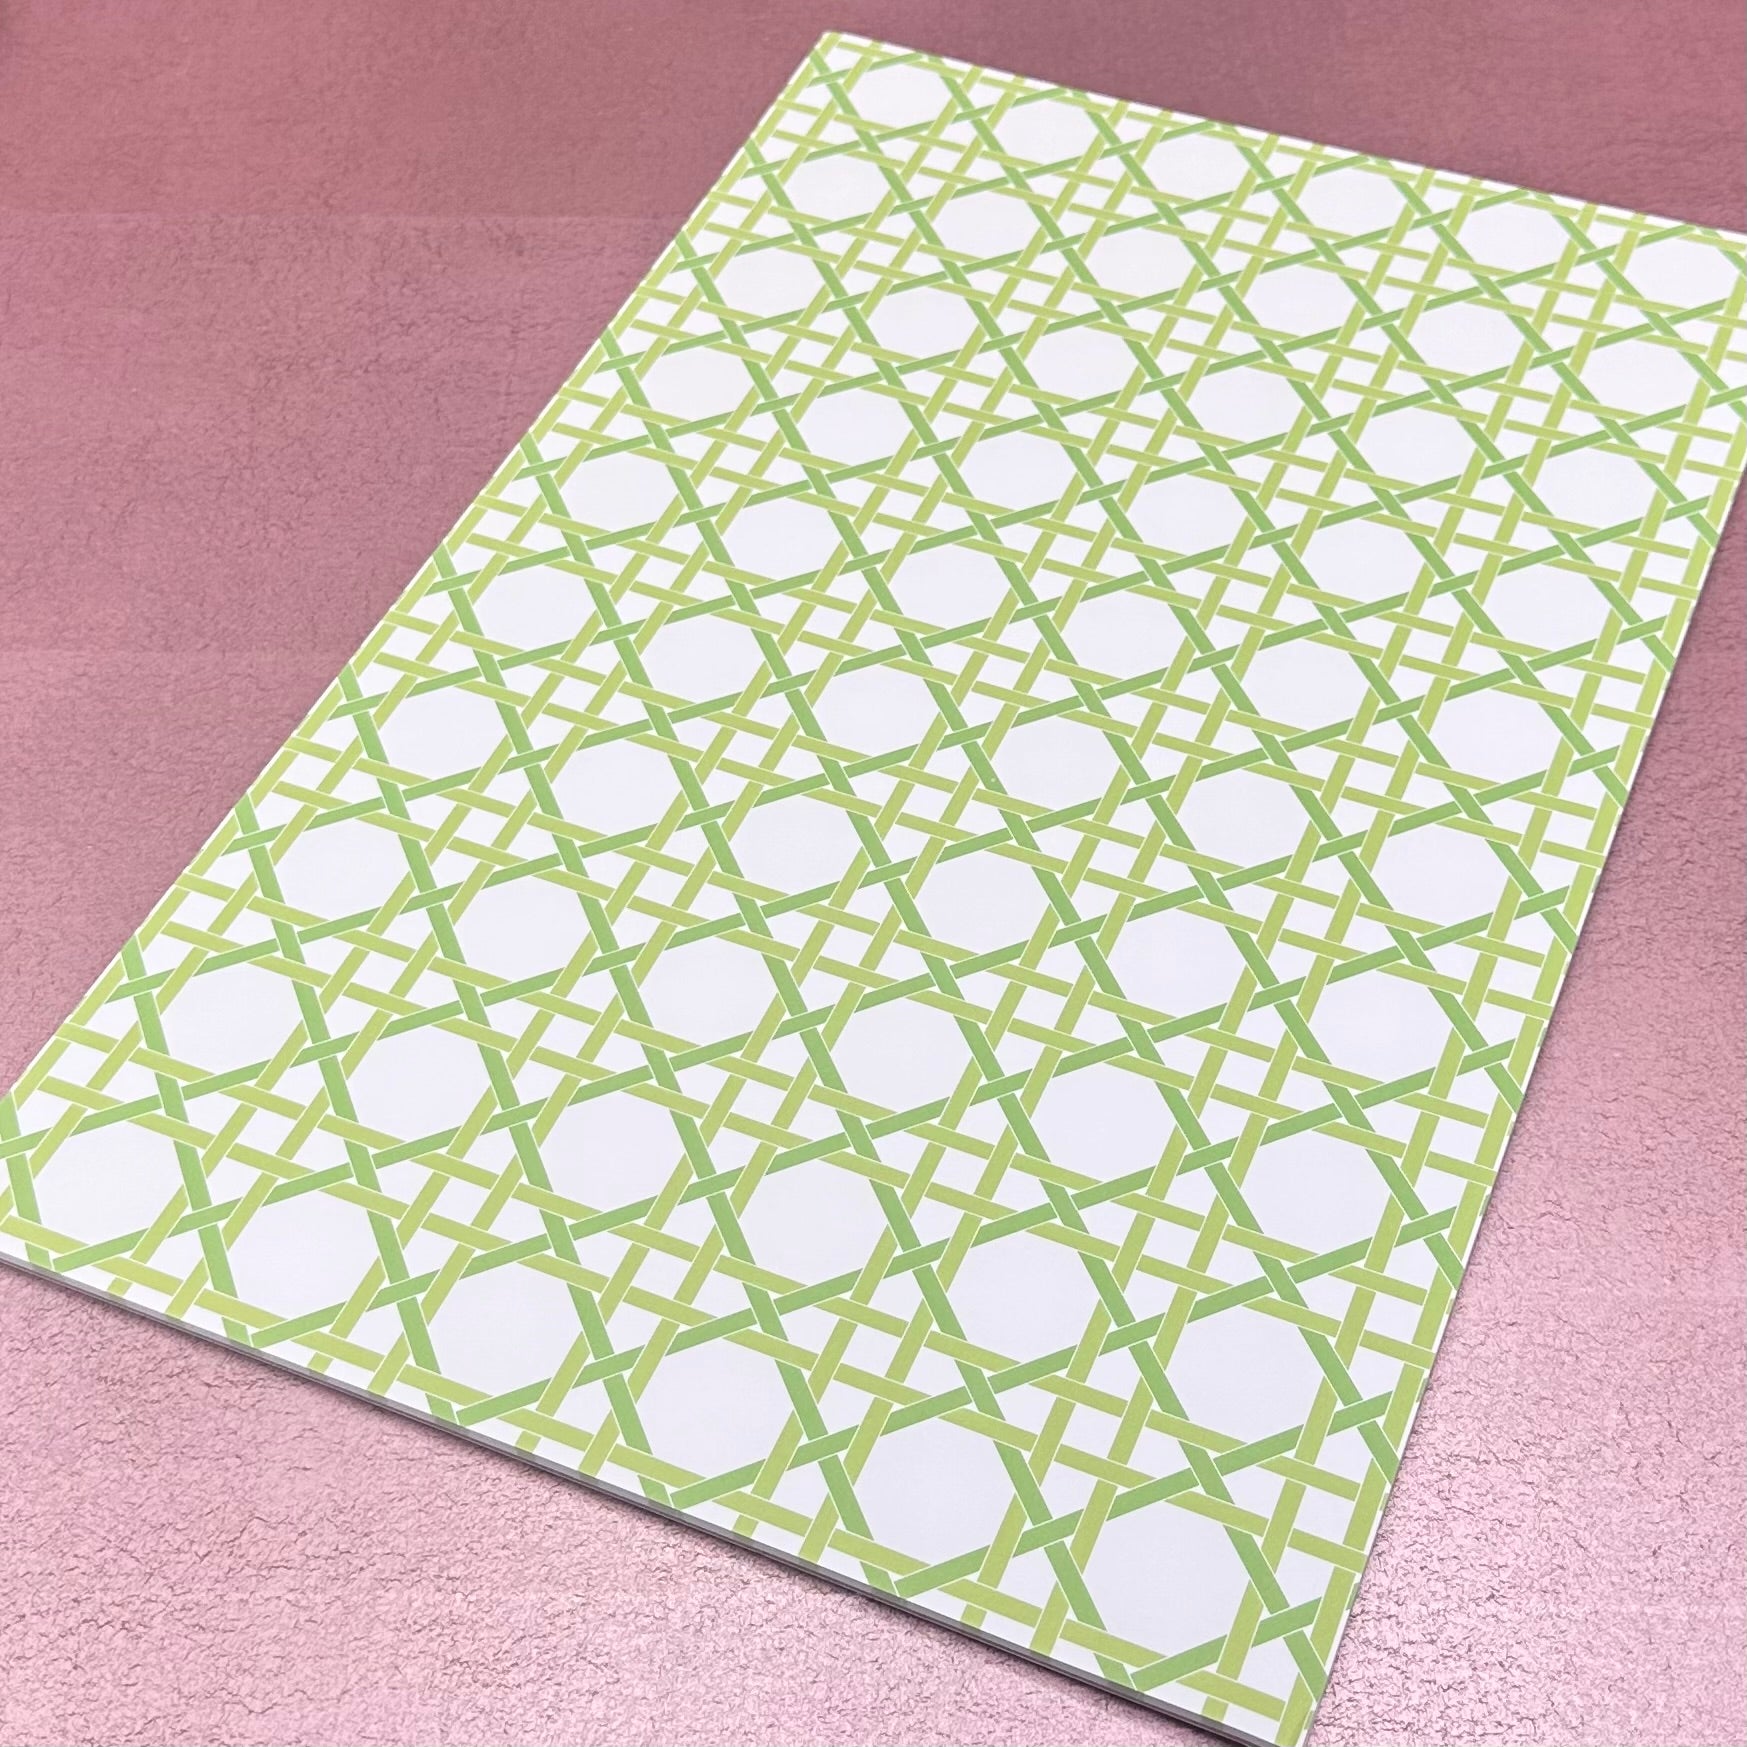 Cane Weave Paper Placemats